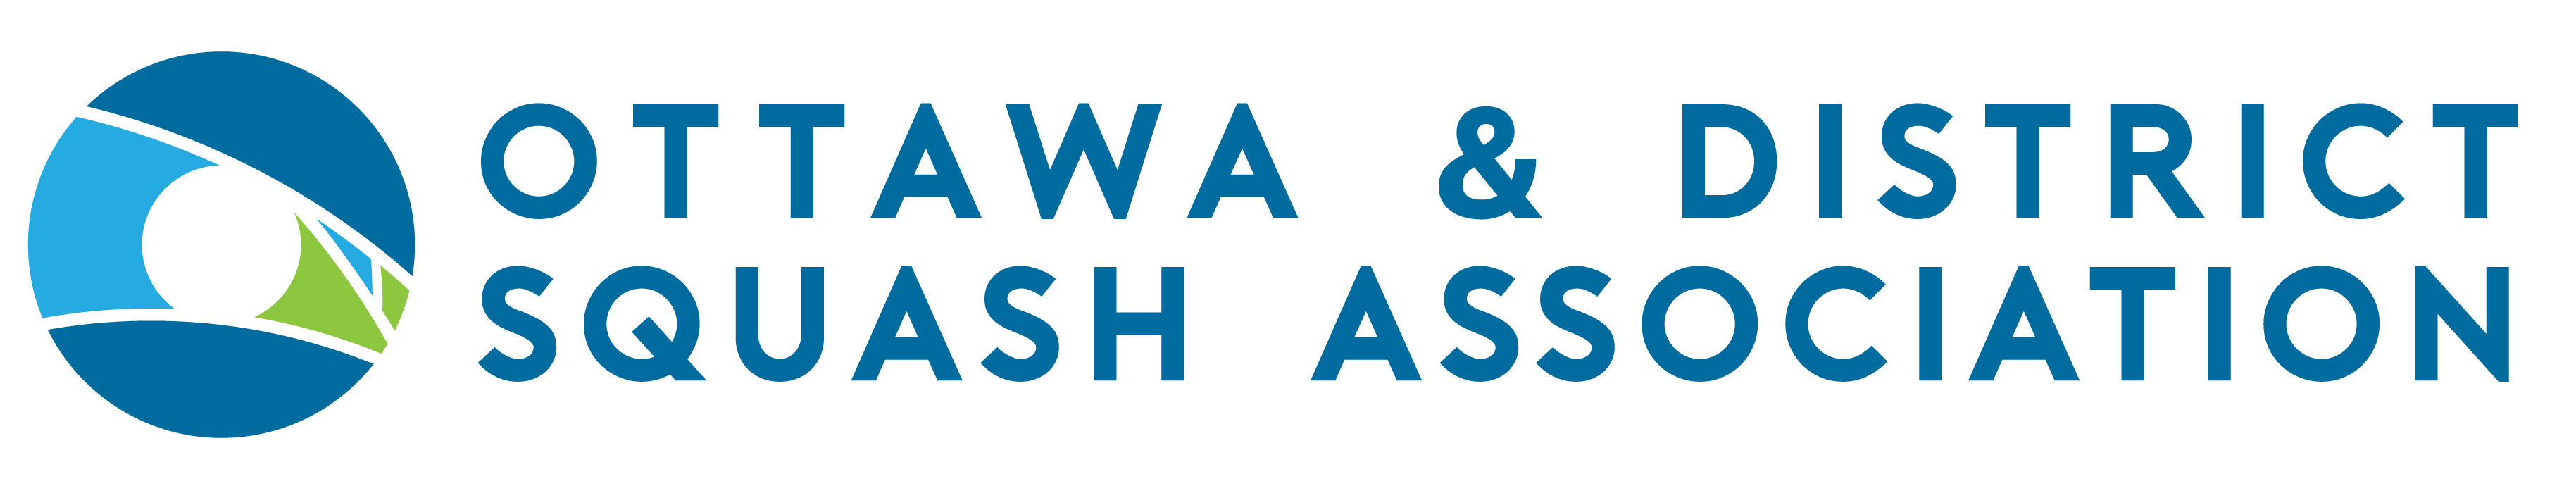 Ottawa & District Squash Association